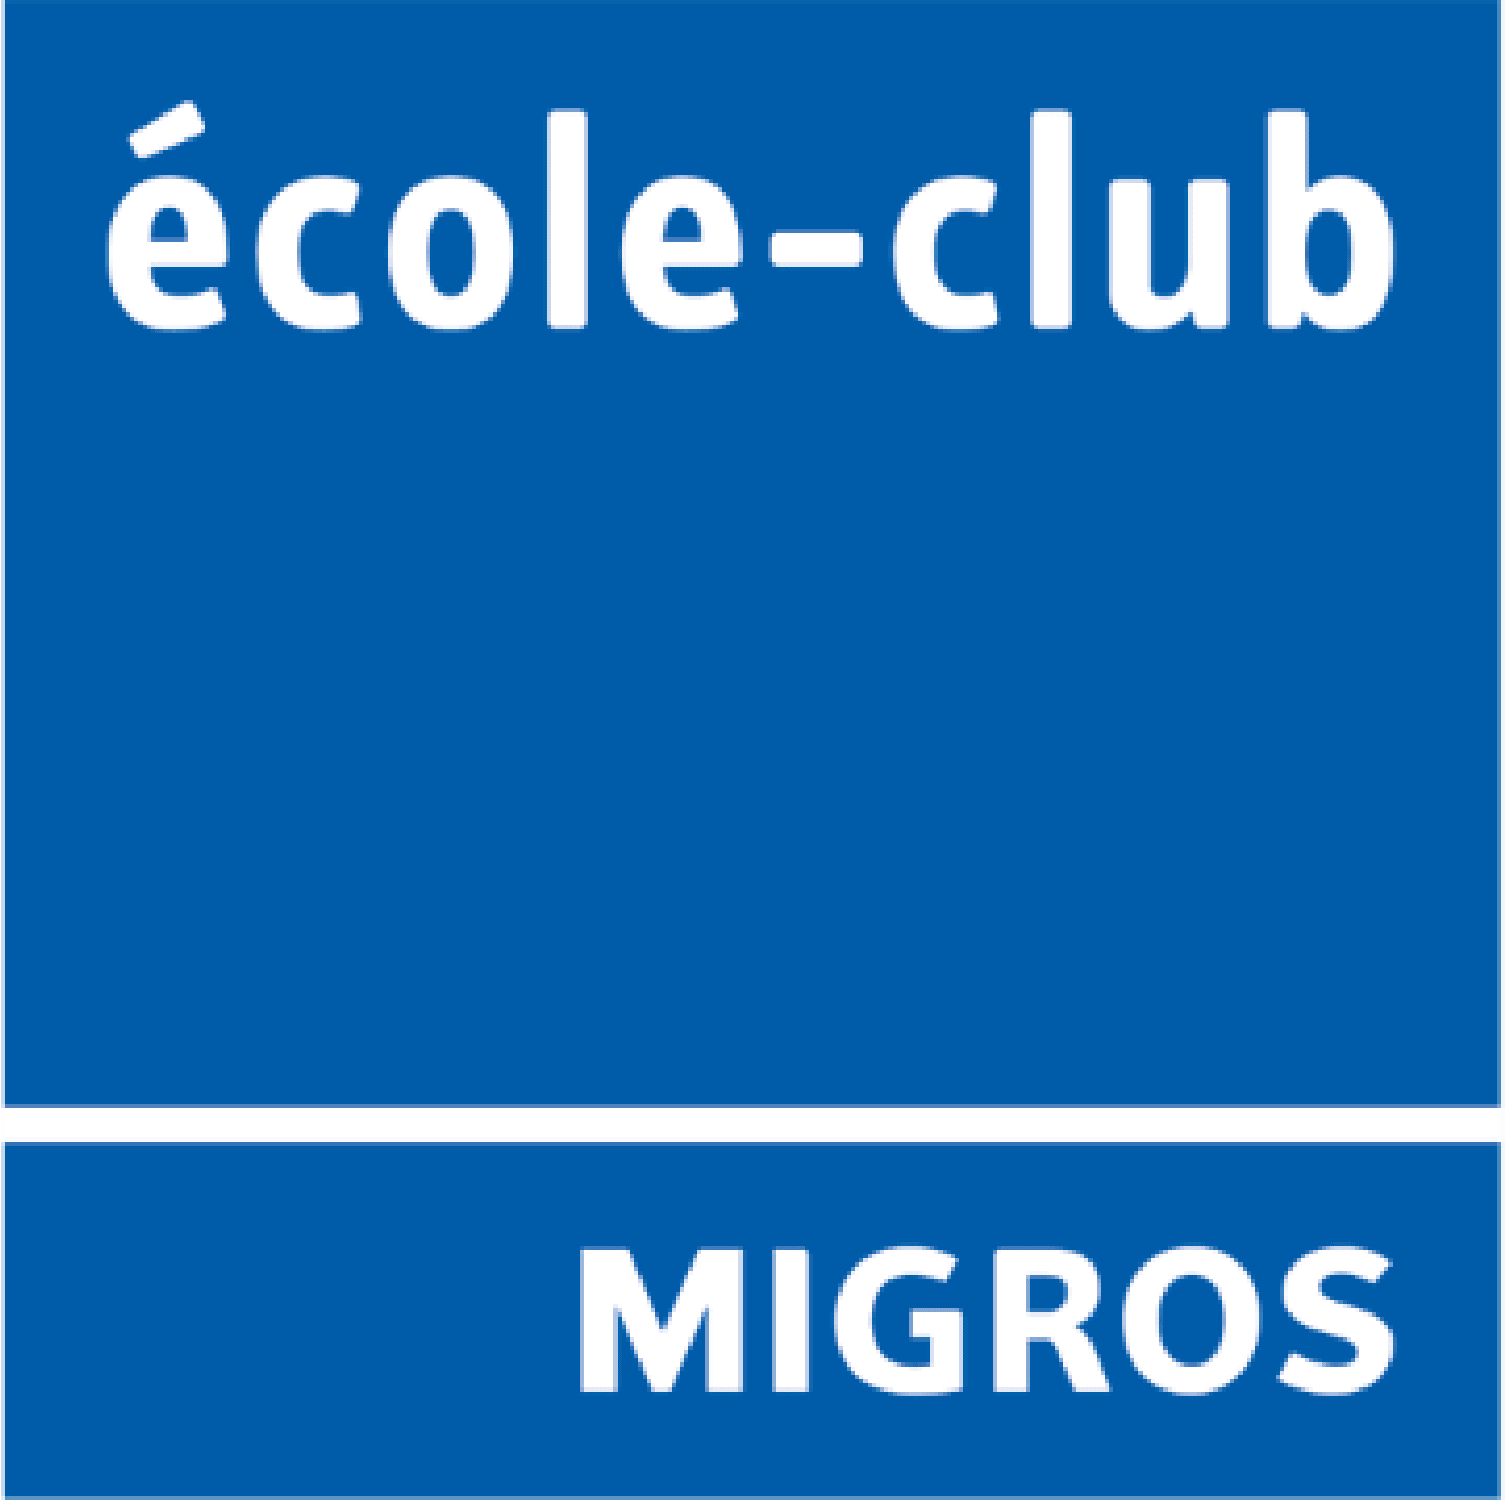 école club migros migros agence marketing genève agence marketing digital agence de communication genève